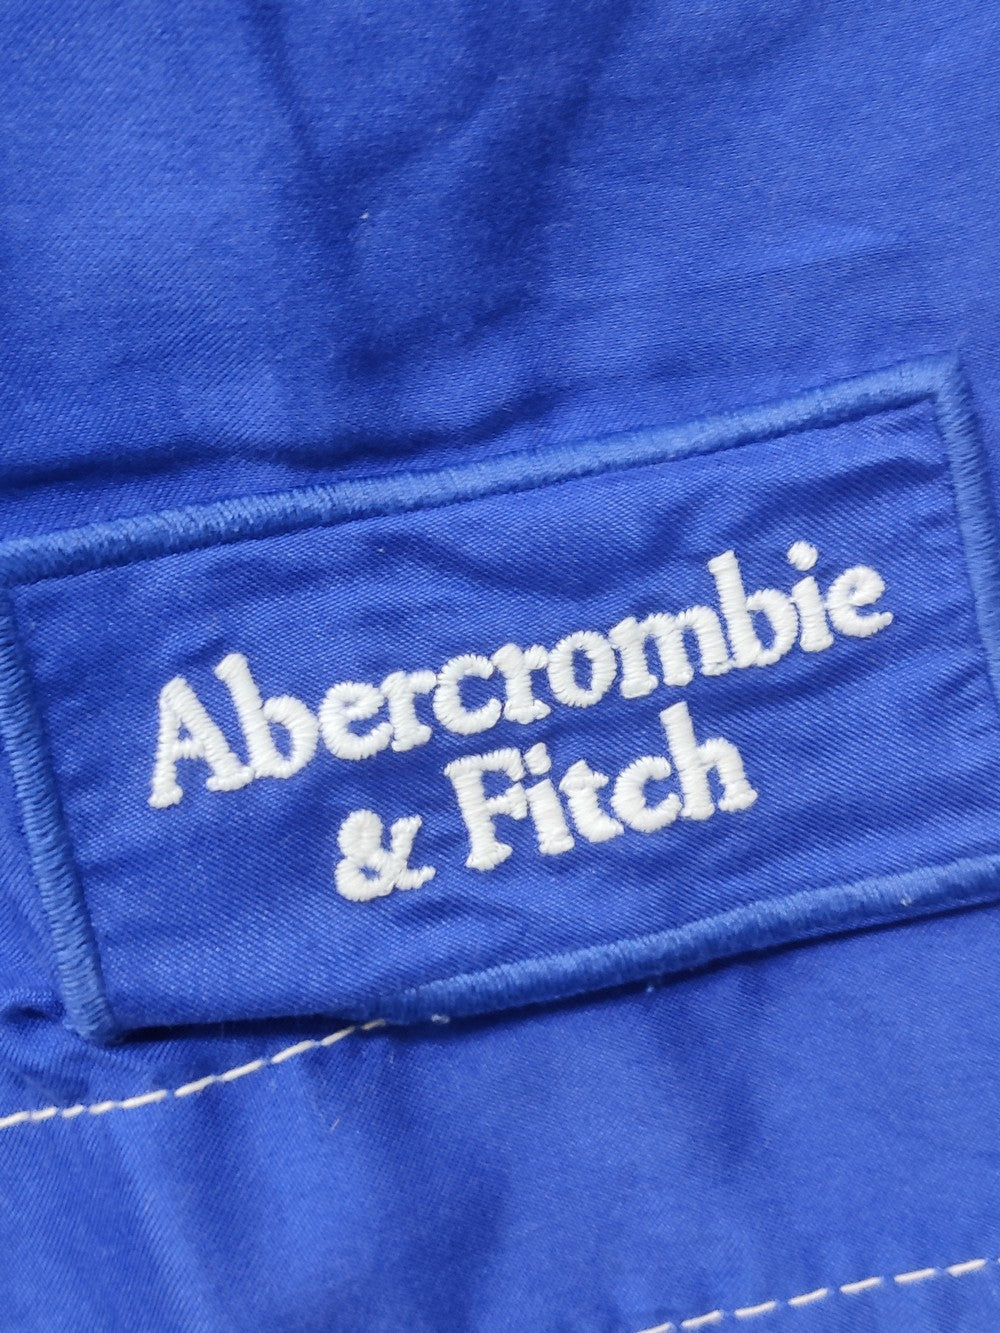 Abercrombie & Fitch Branded Original Cotton Short For Men